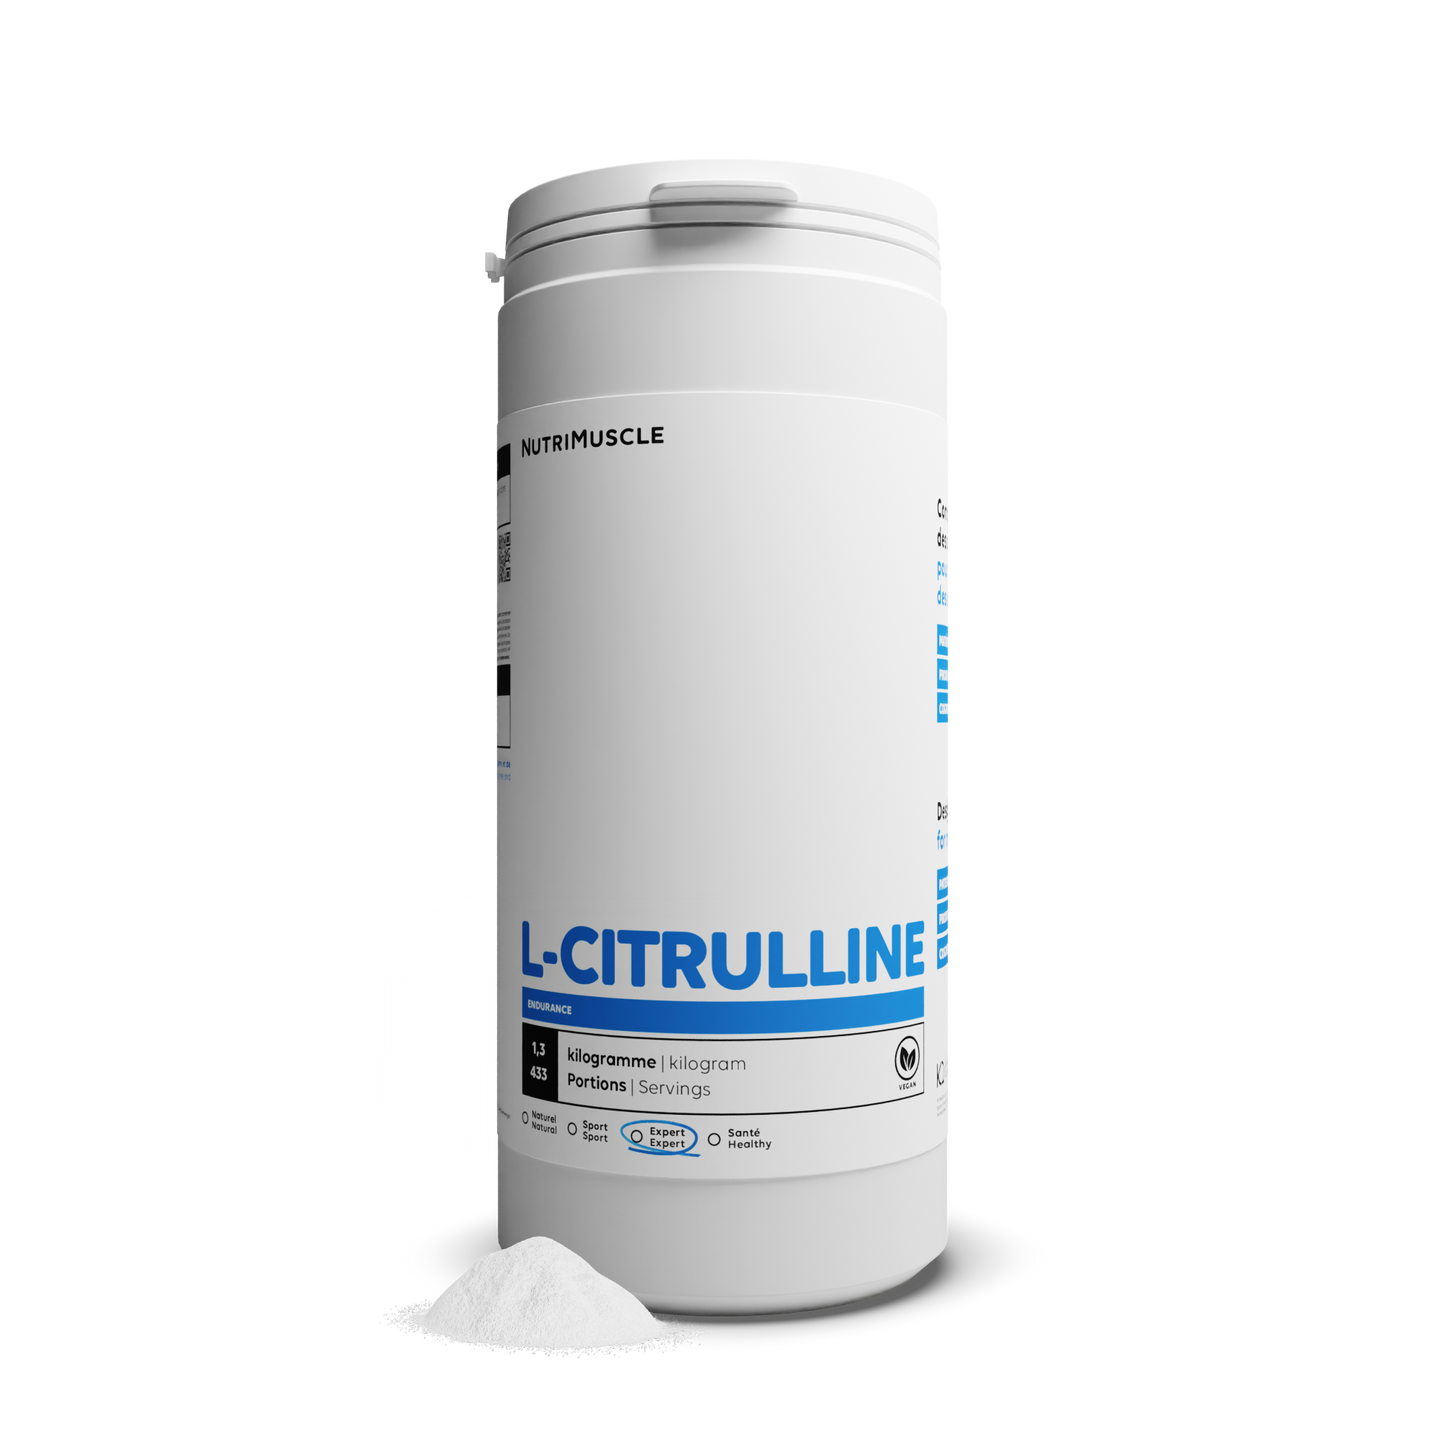 Citrulline (L-Citrulline Base) in powder